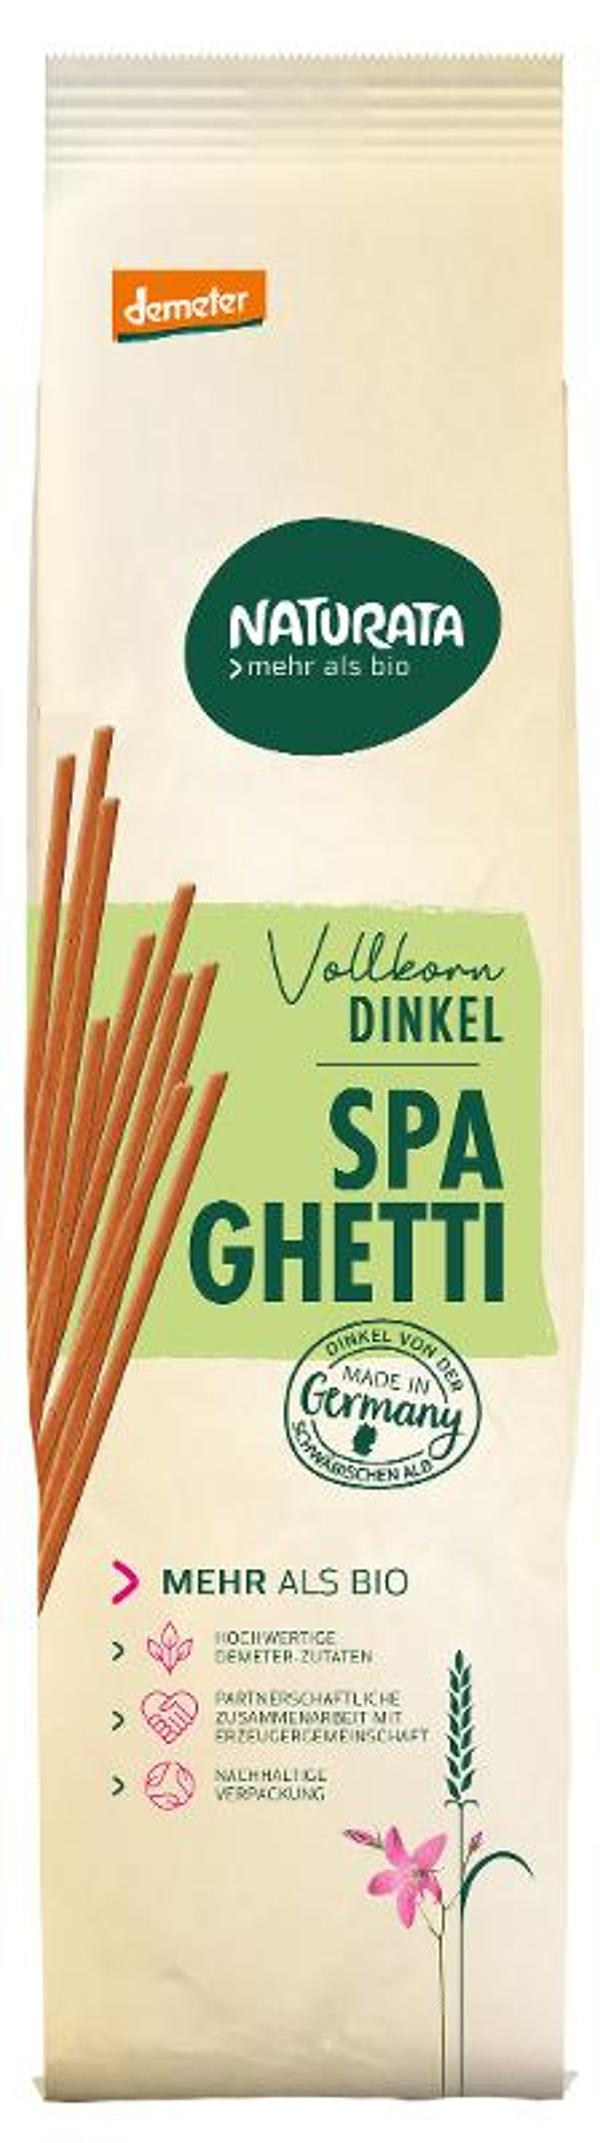 Produktfoto zu Dinkel-Vollkorn Spaghetti